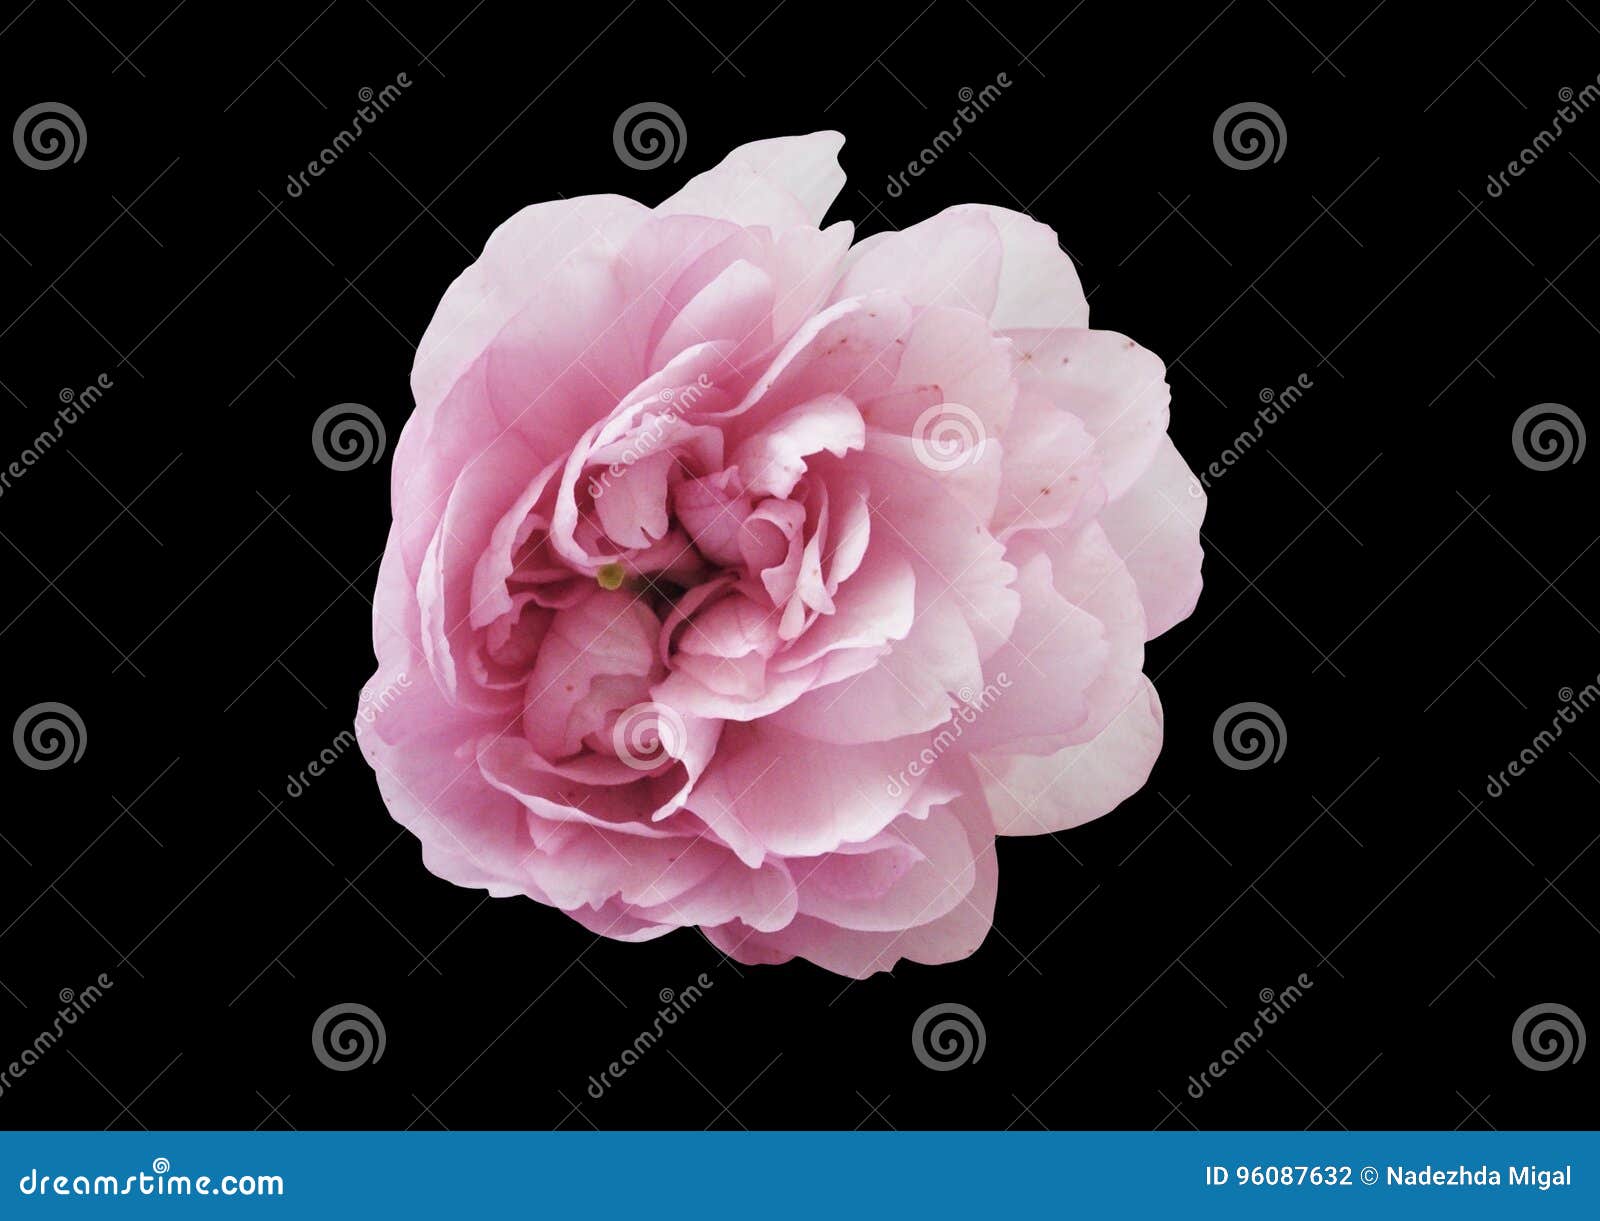 Pink Rose on Black Background Stock Photo - Image of background, black